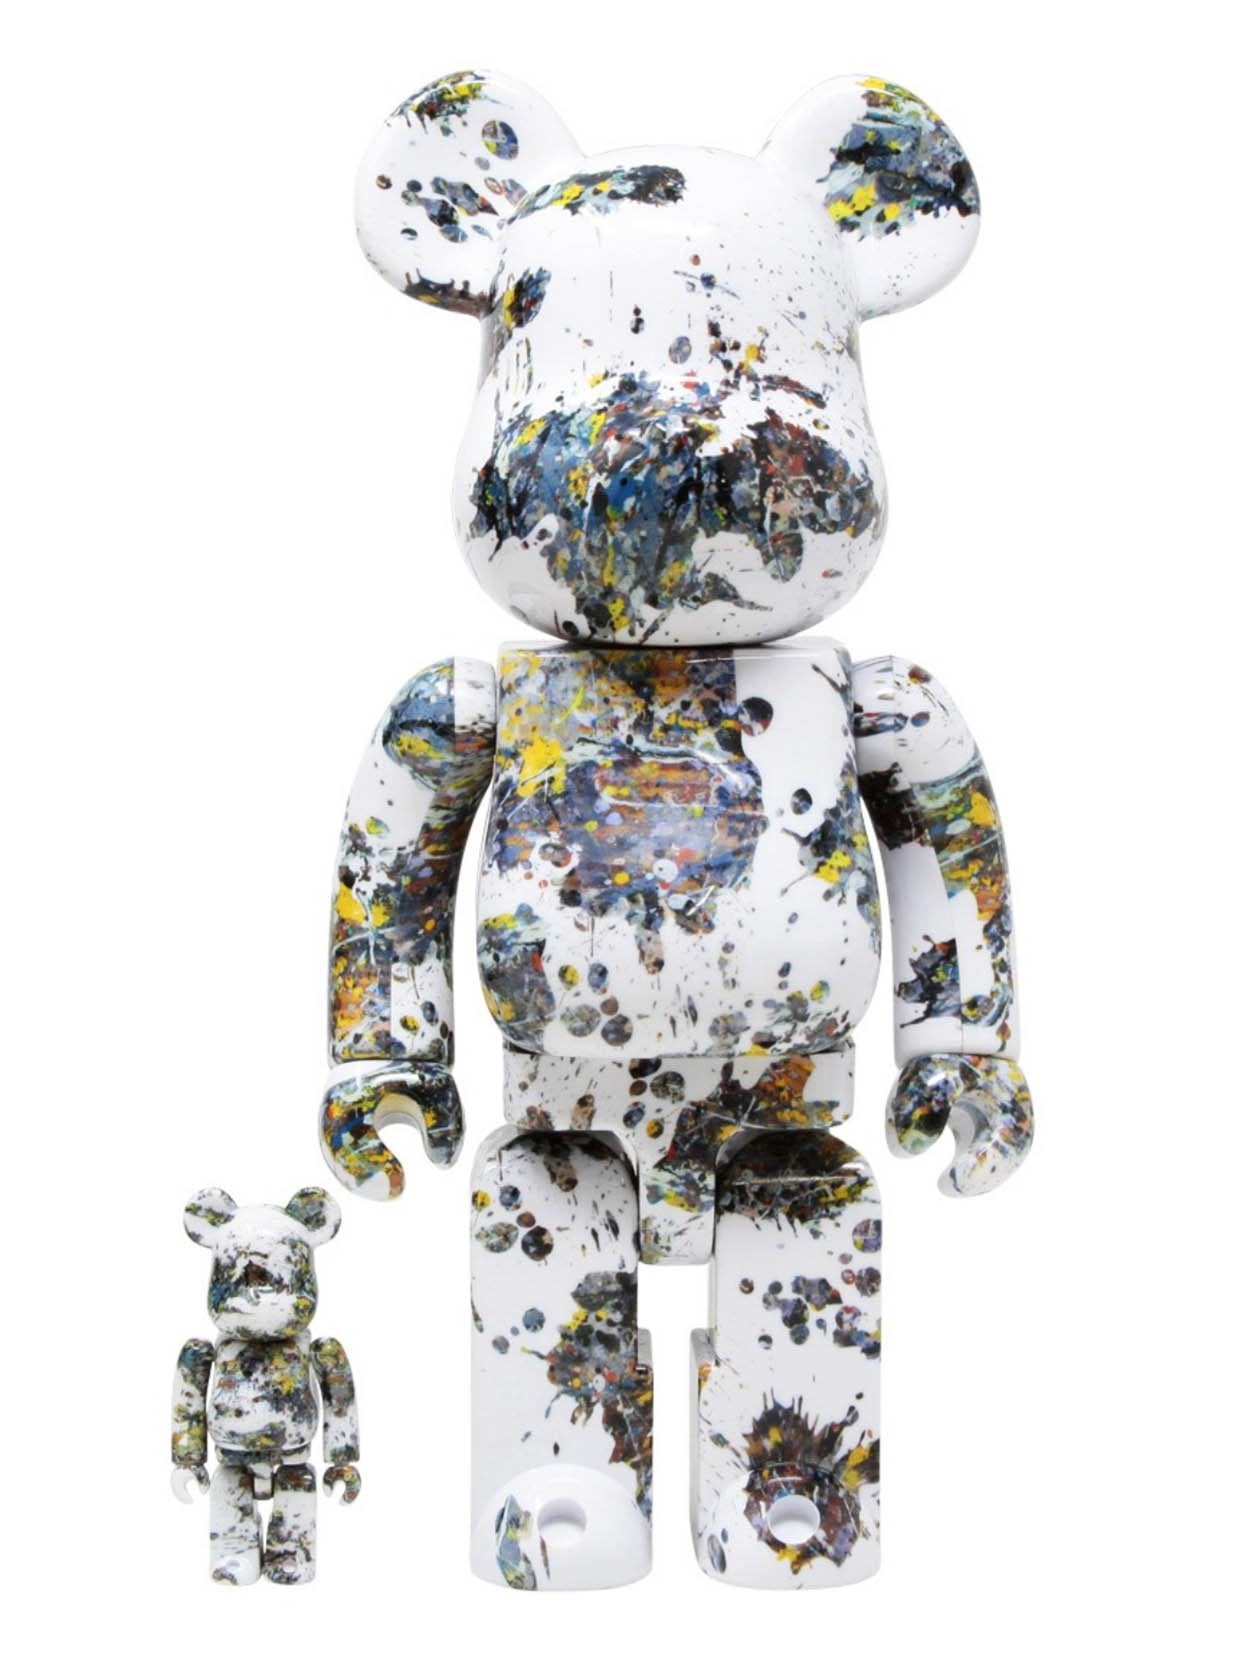 Bearbrick Medicom Toys for sale - Jackson Pollock (v3) SPLASH 400